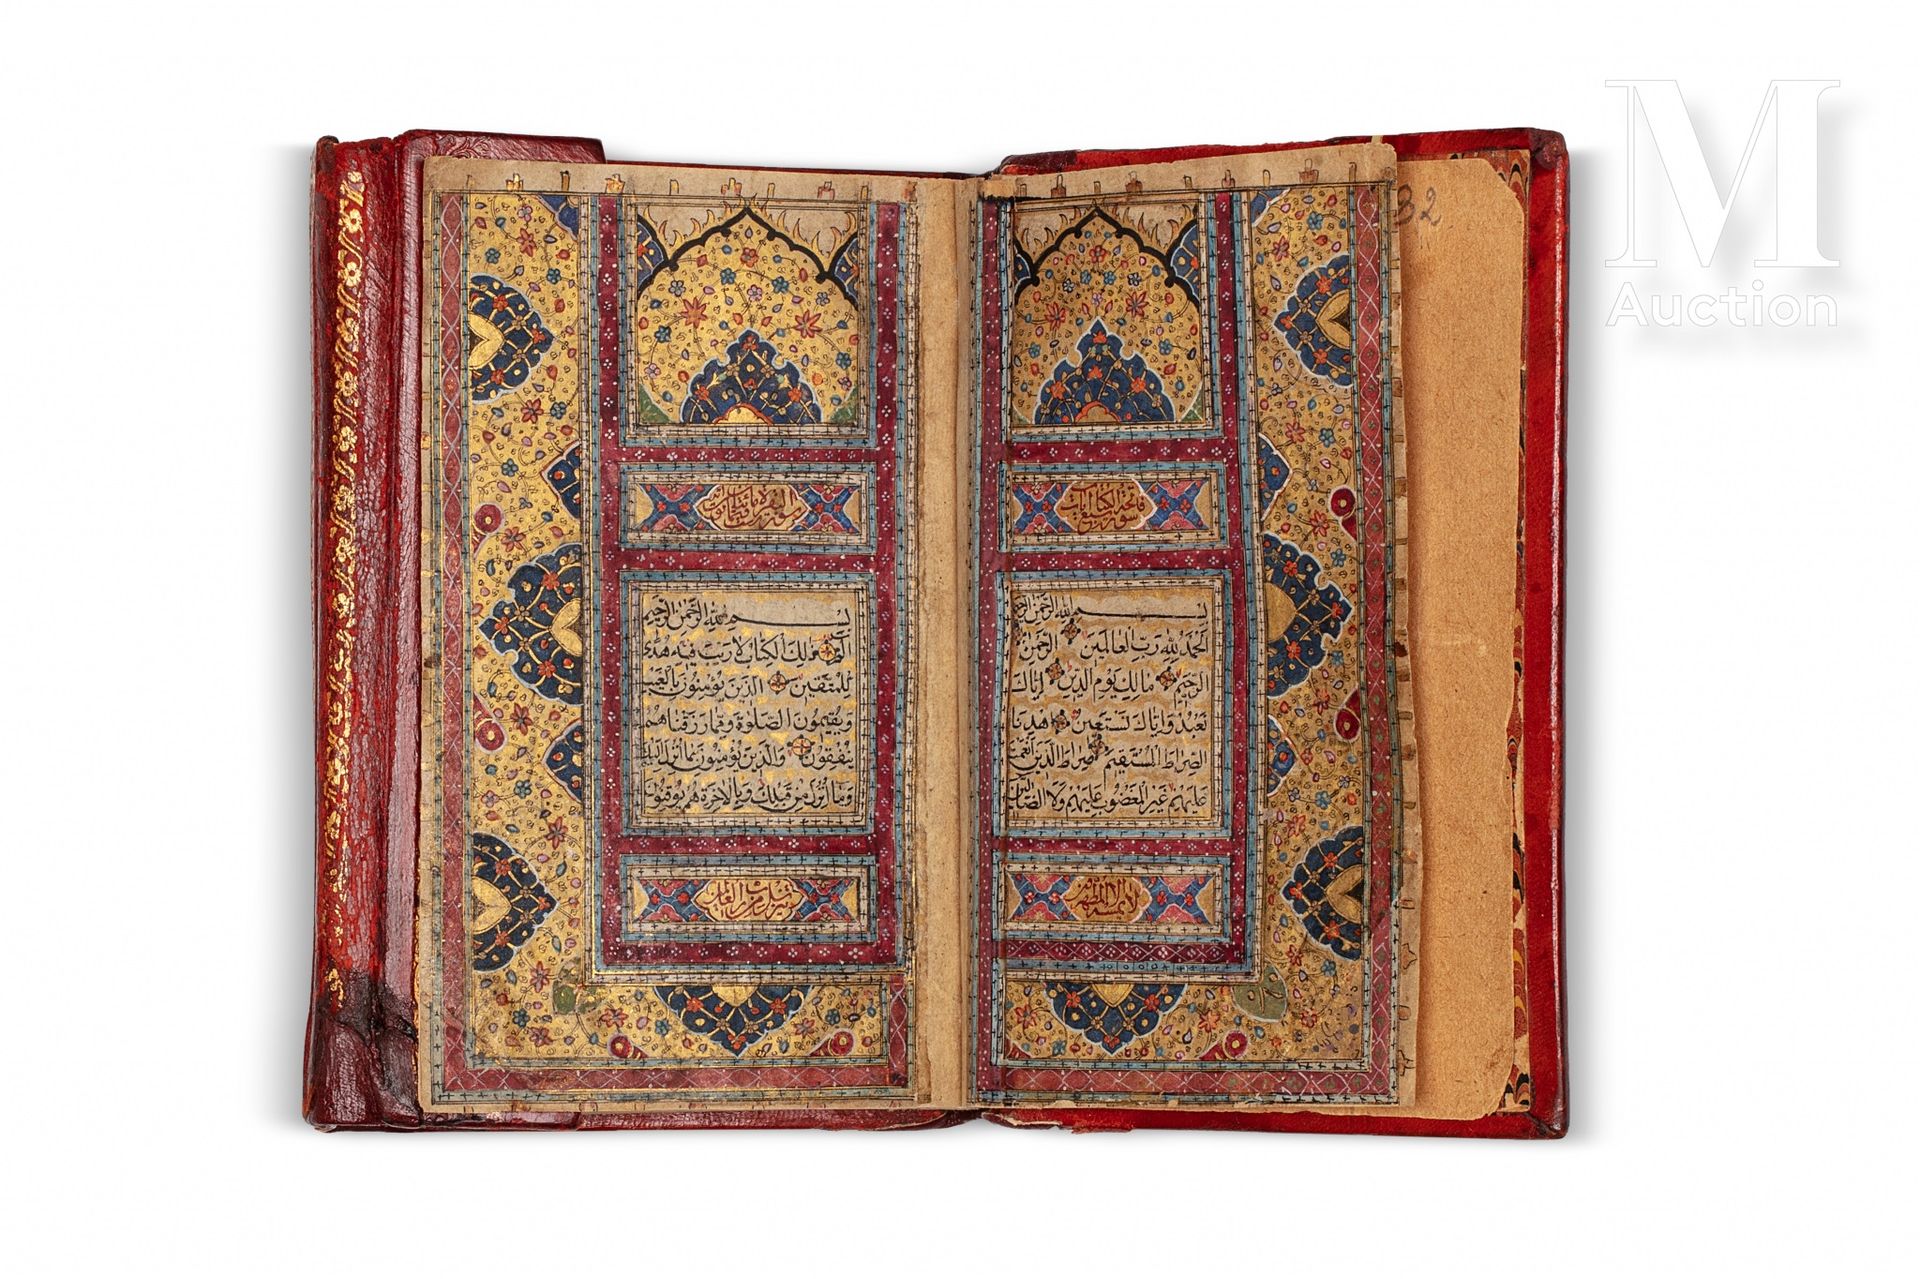 Petit Coran Qajar 伊朗，19世纪

纸质阿拉伯文手稿，212页，每页20行，用黑色墨水书法，以常规的黑色 "naskh "在鎏金背景的云彩中保&hellip;